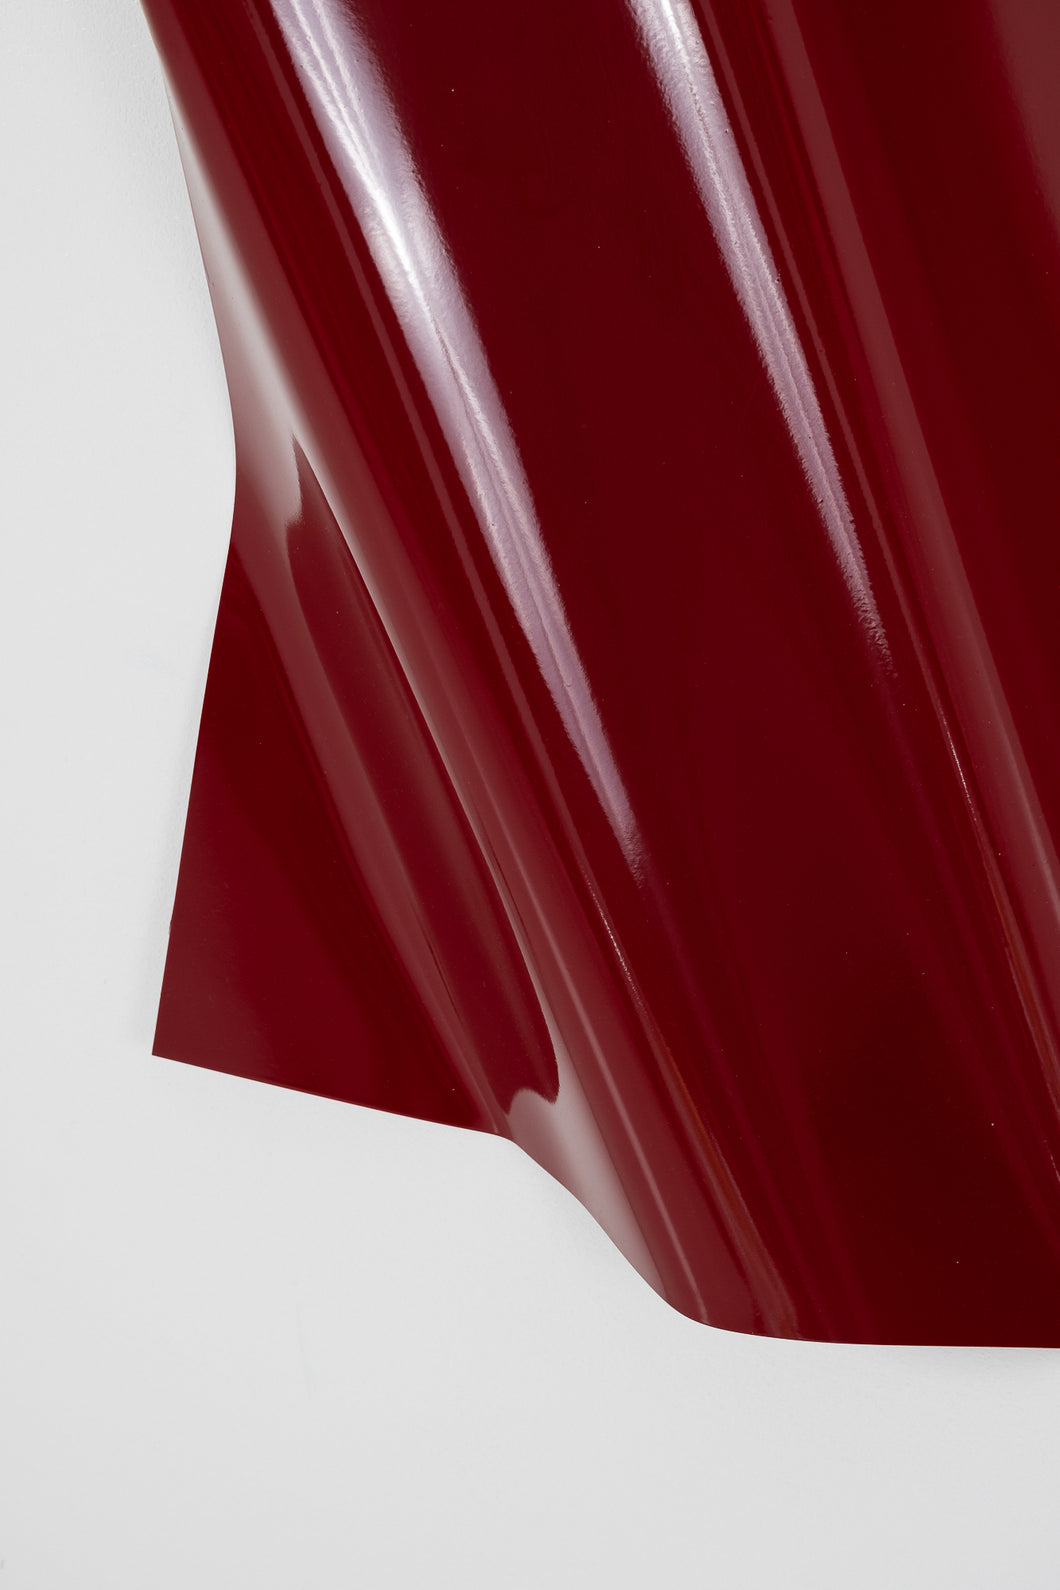 Rodan Kane Hart | Reflective Sheet Red Form